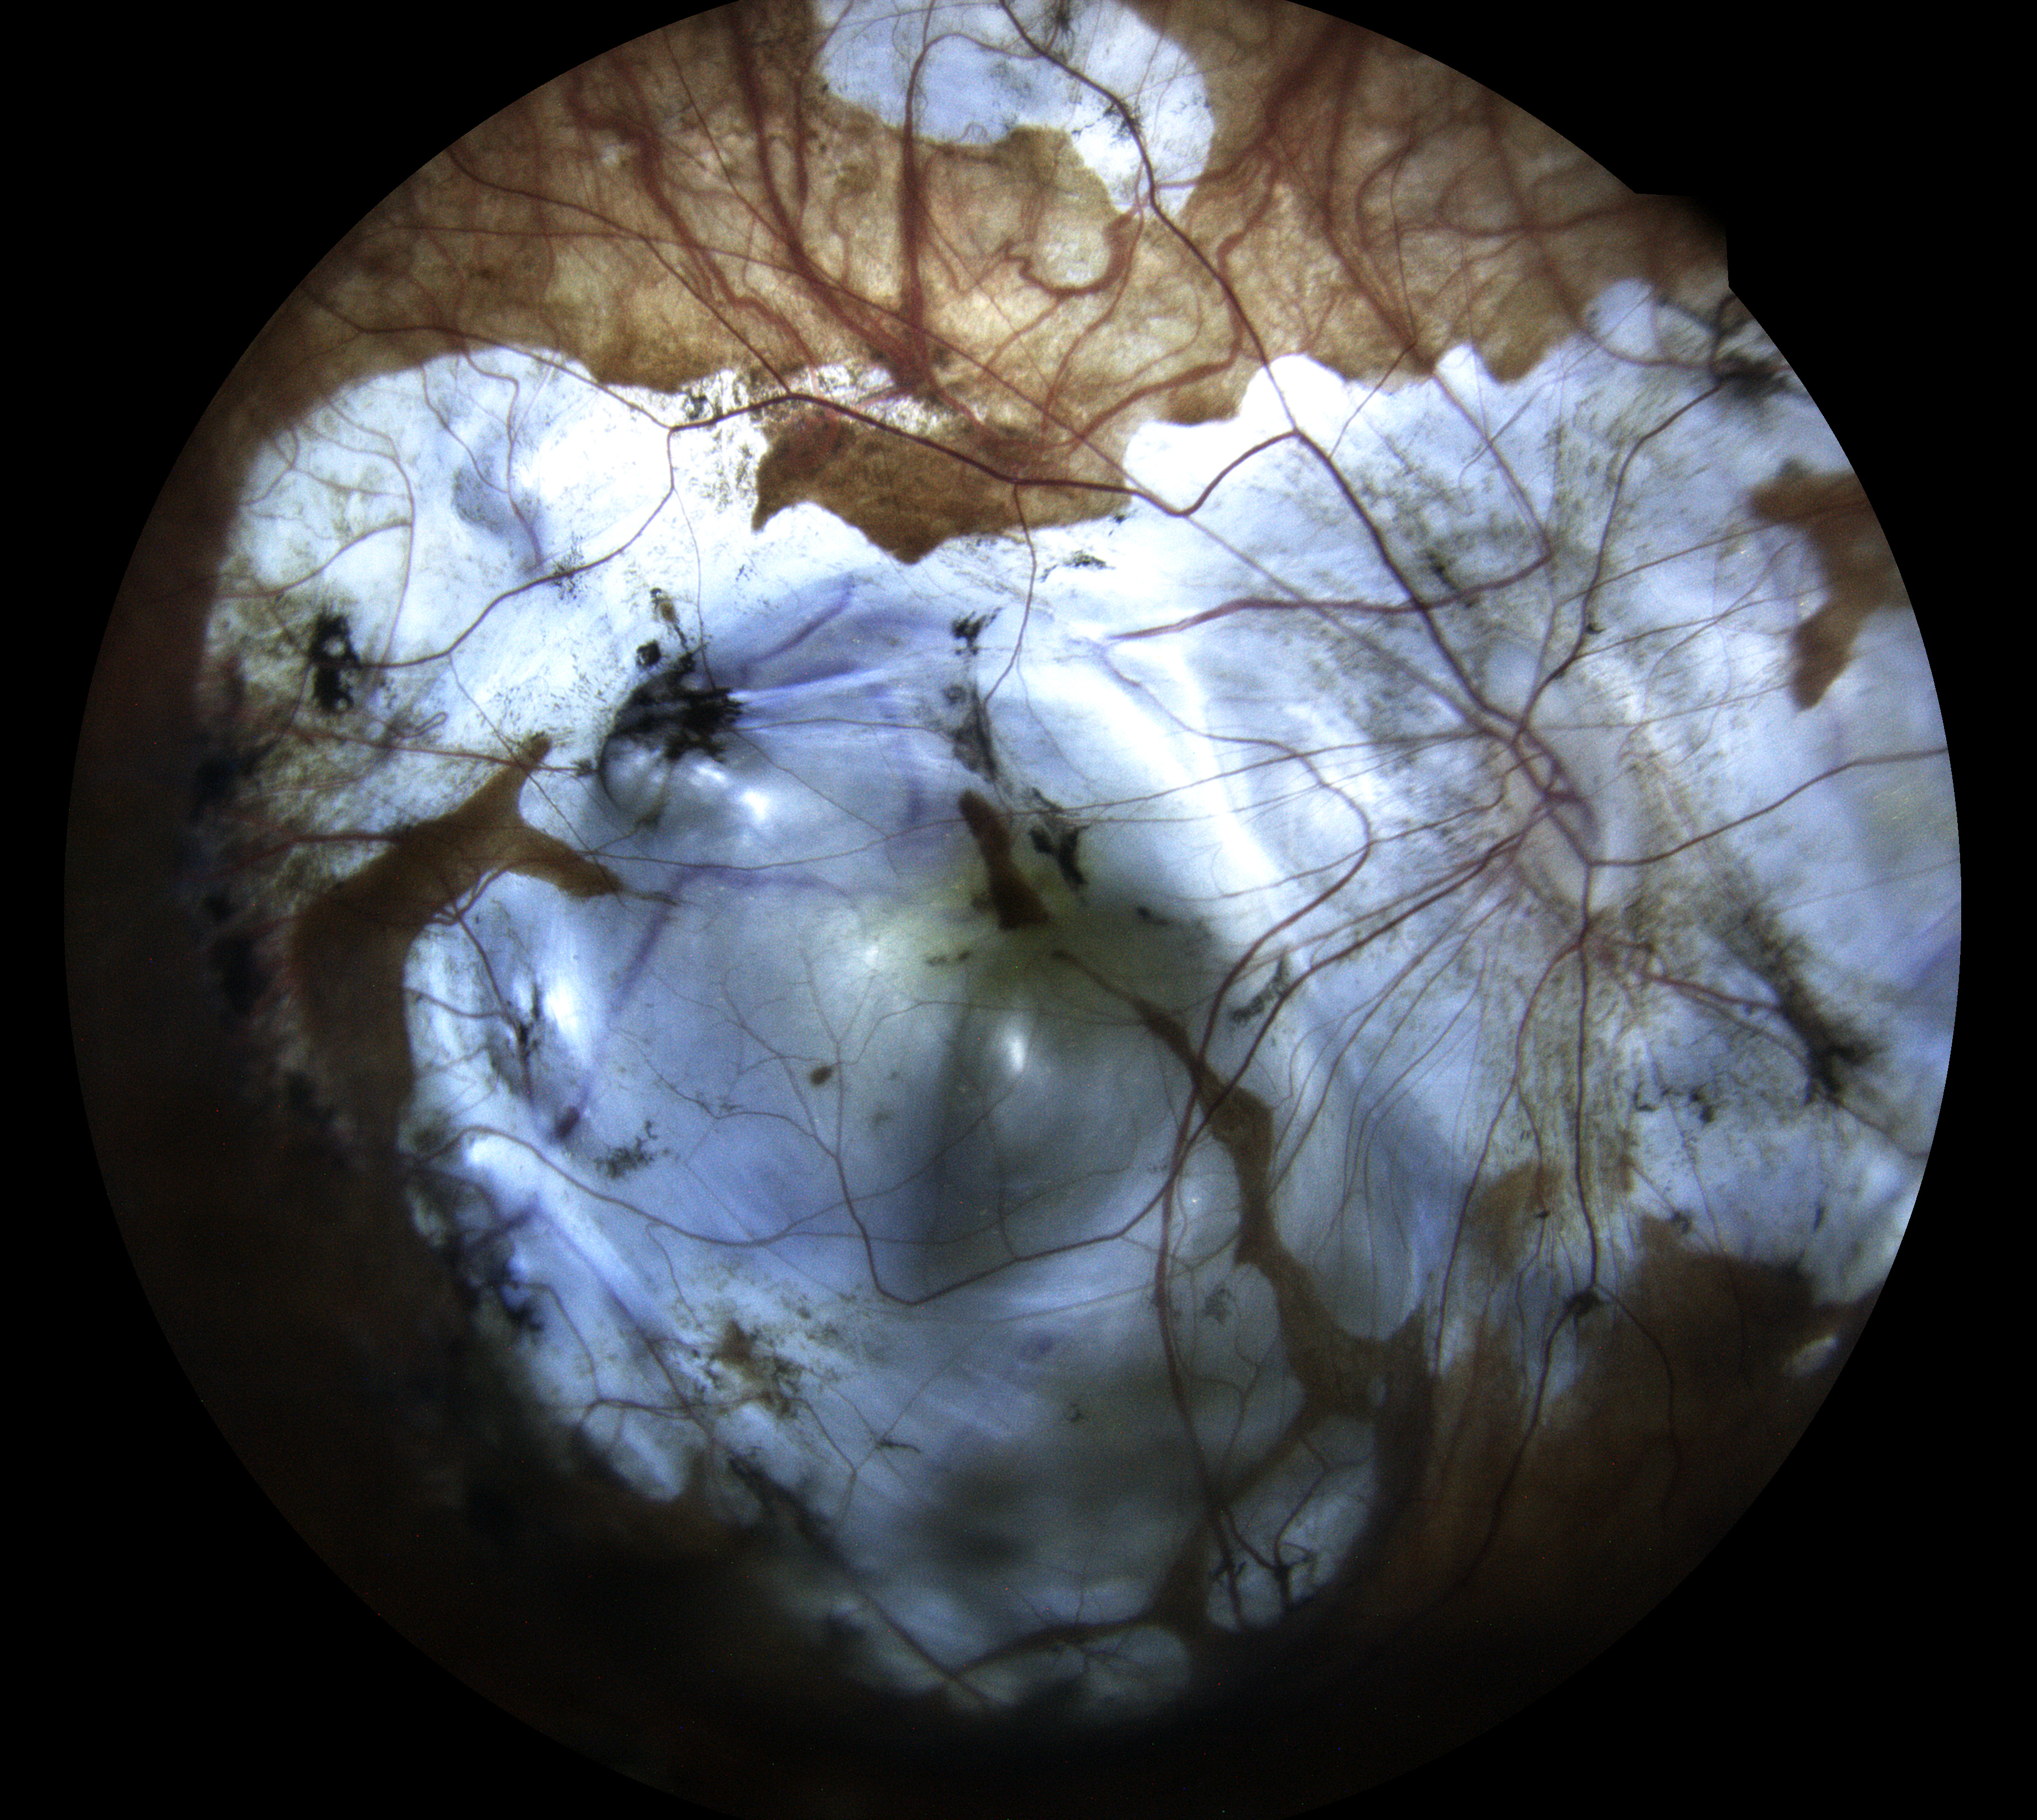 myopia eidon muratet retina